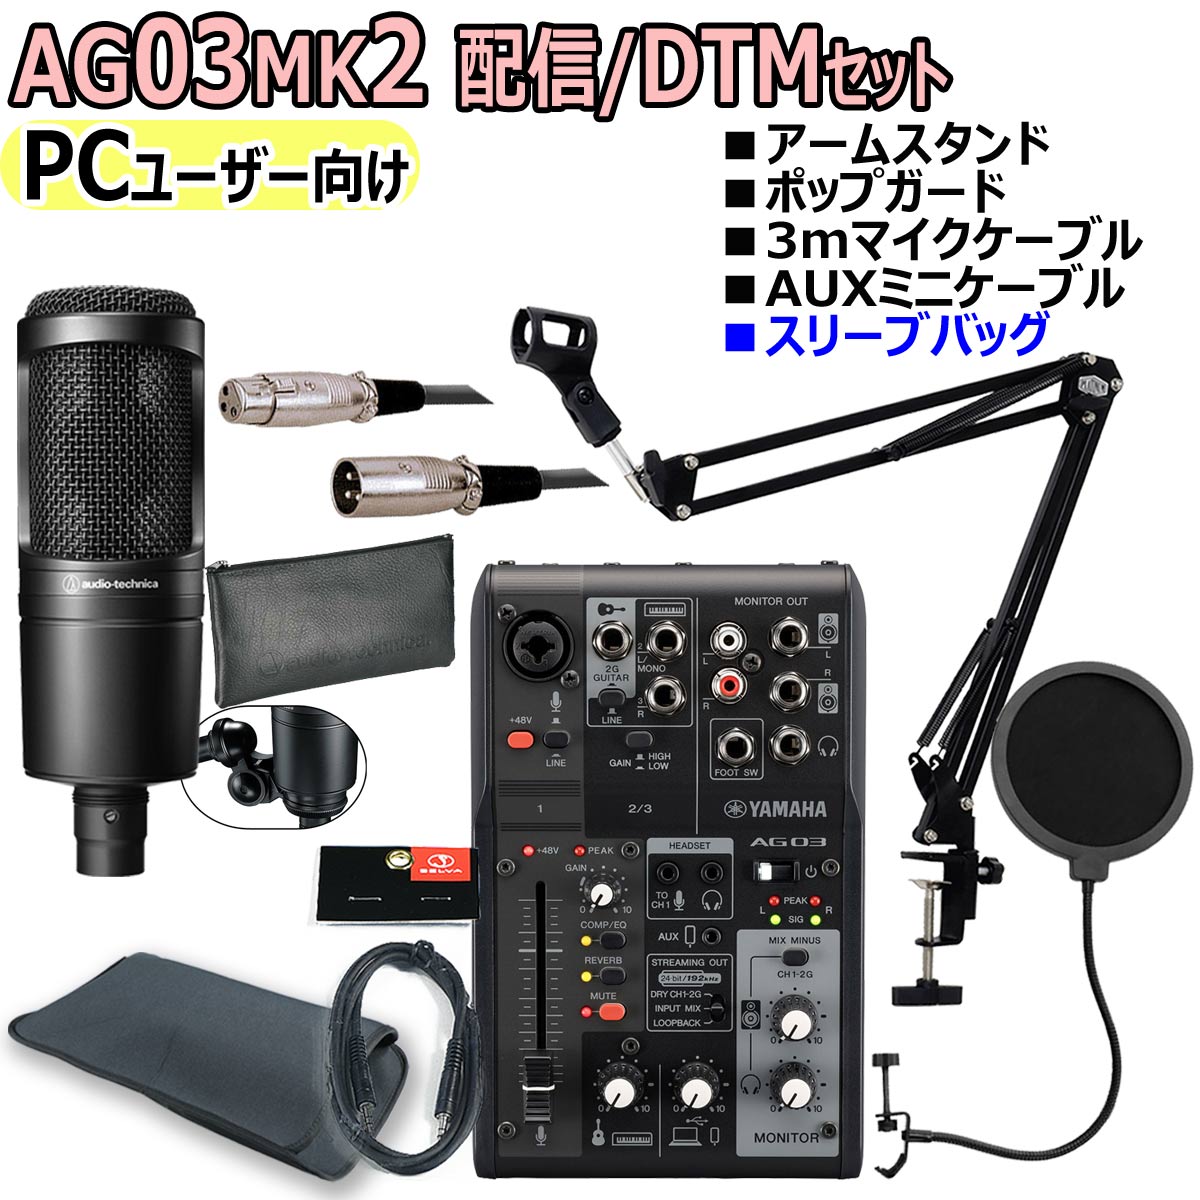 YAMAHA / AG03MK2 BLACK AT2020 PCユーザー向け 配信/DTMセット